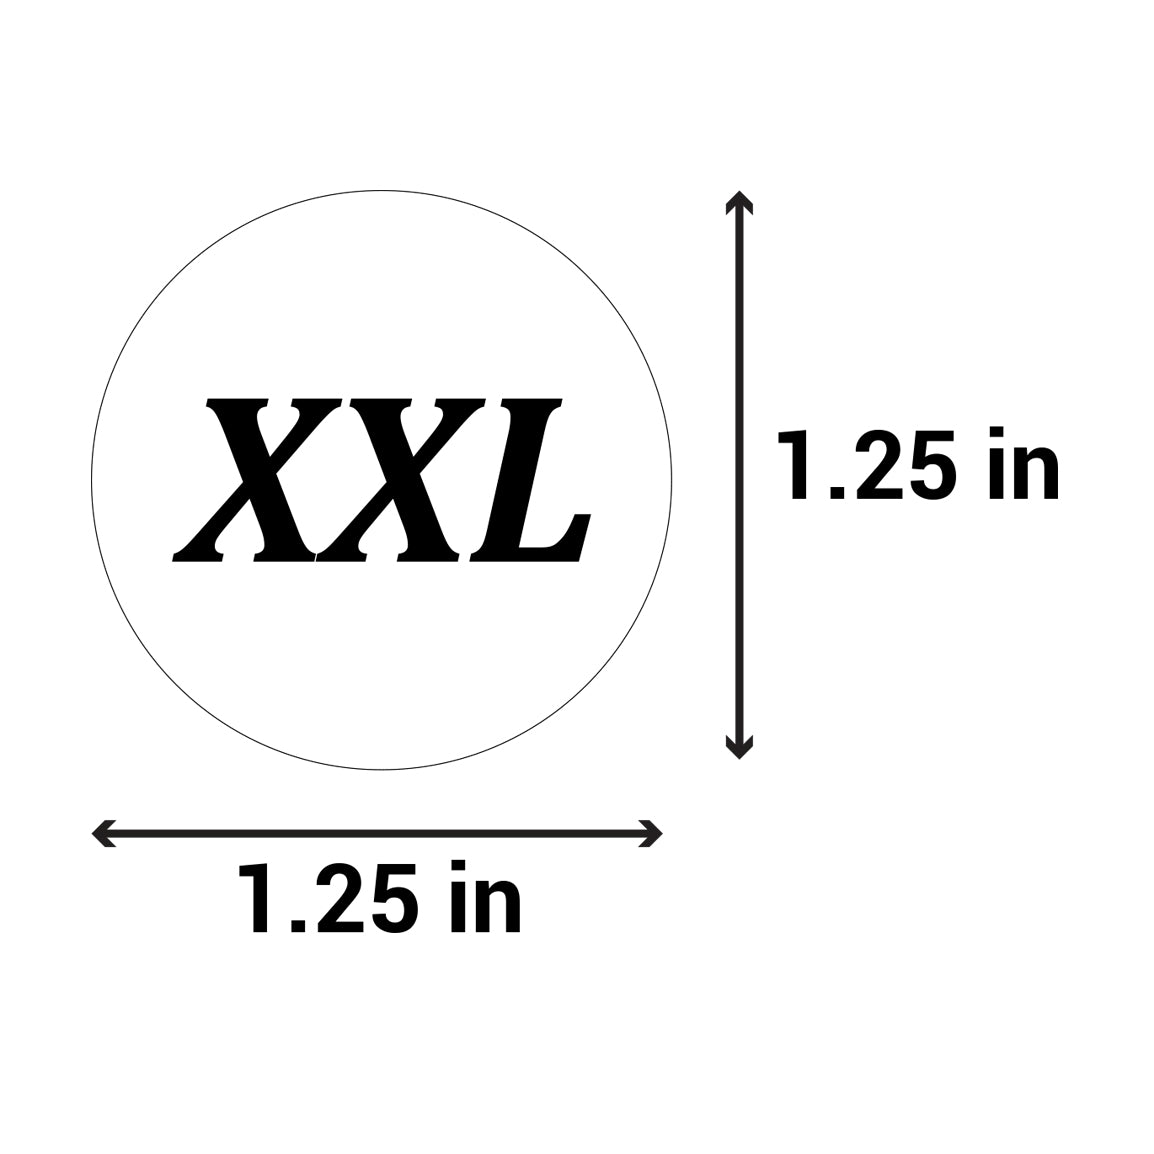 1.25 inch | Shoe & Clothing Size: (XXL) XX-Large Stickers